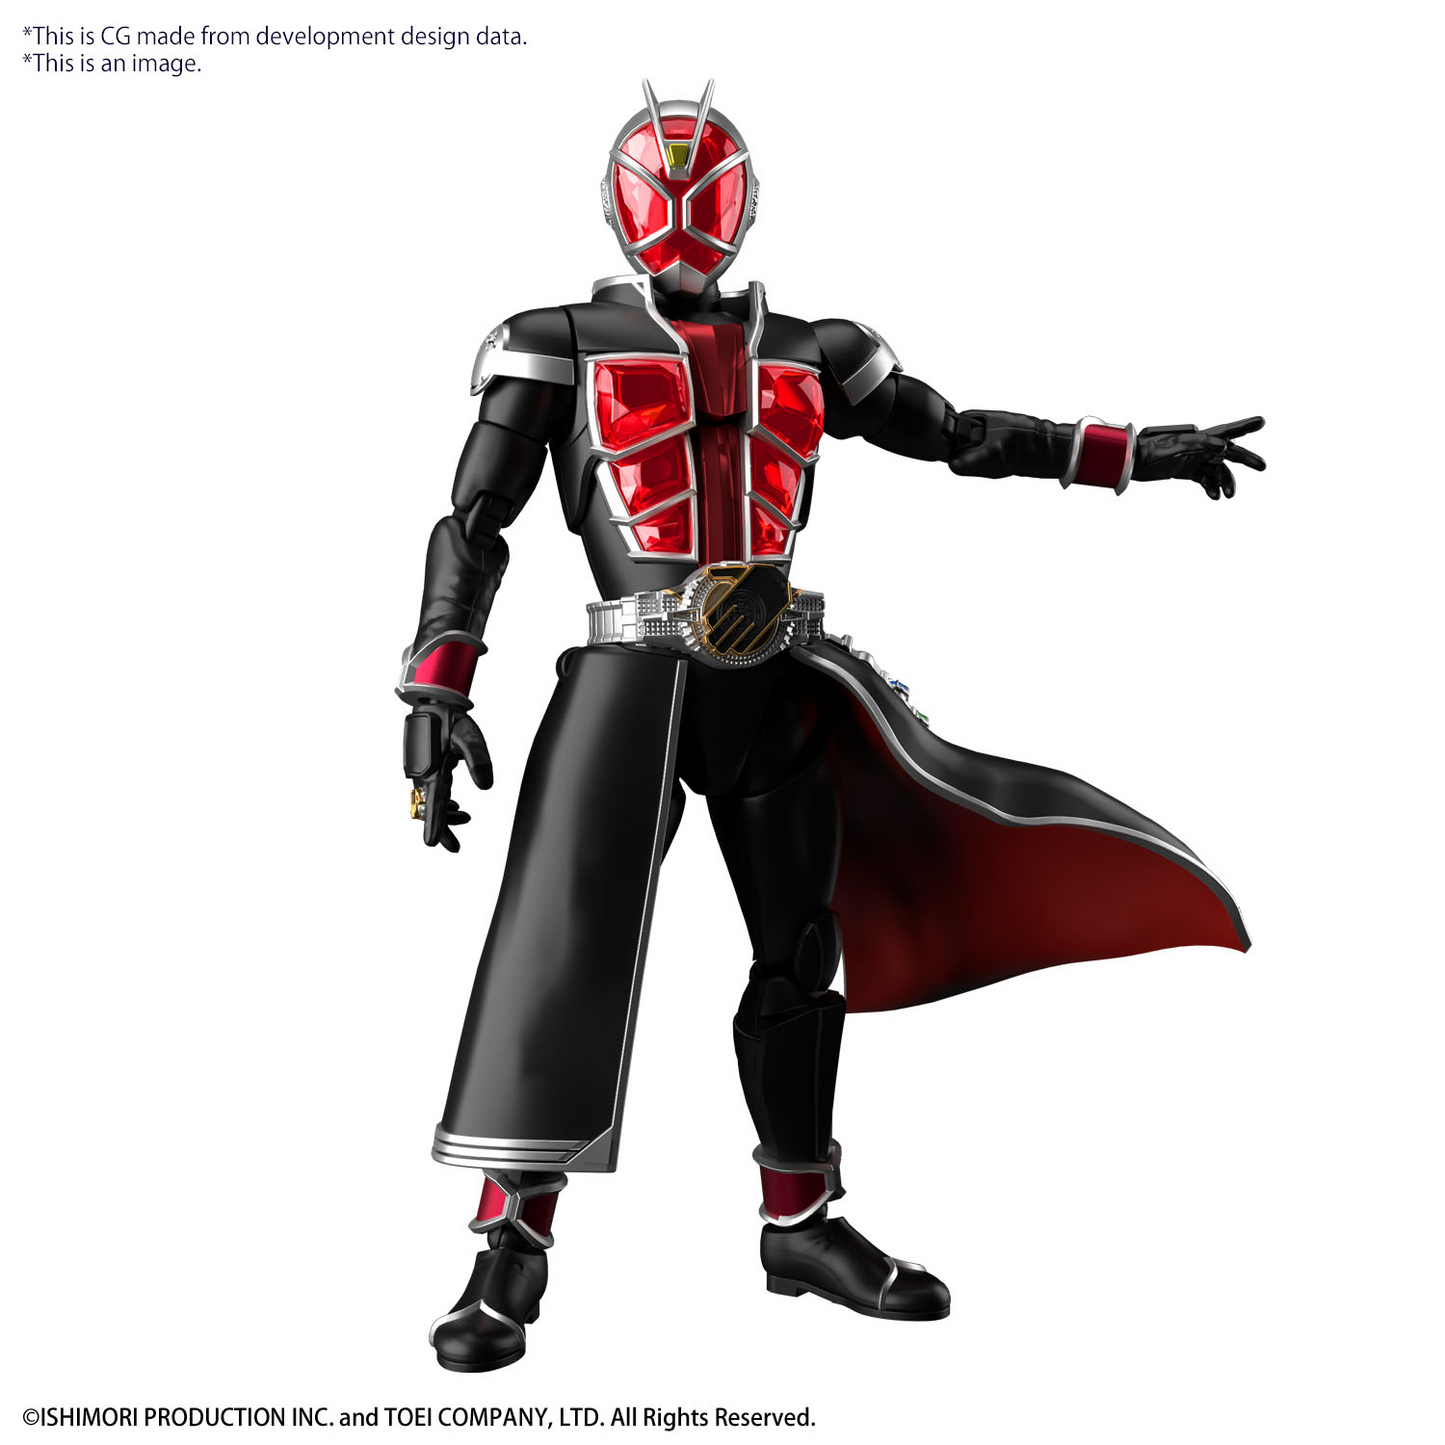 Kamen Rider Figure-Rise Standard Kamen Rider Wizard (Flame Style Ver.) Model Kit